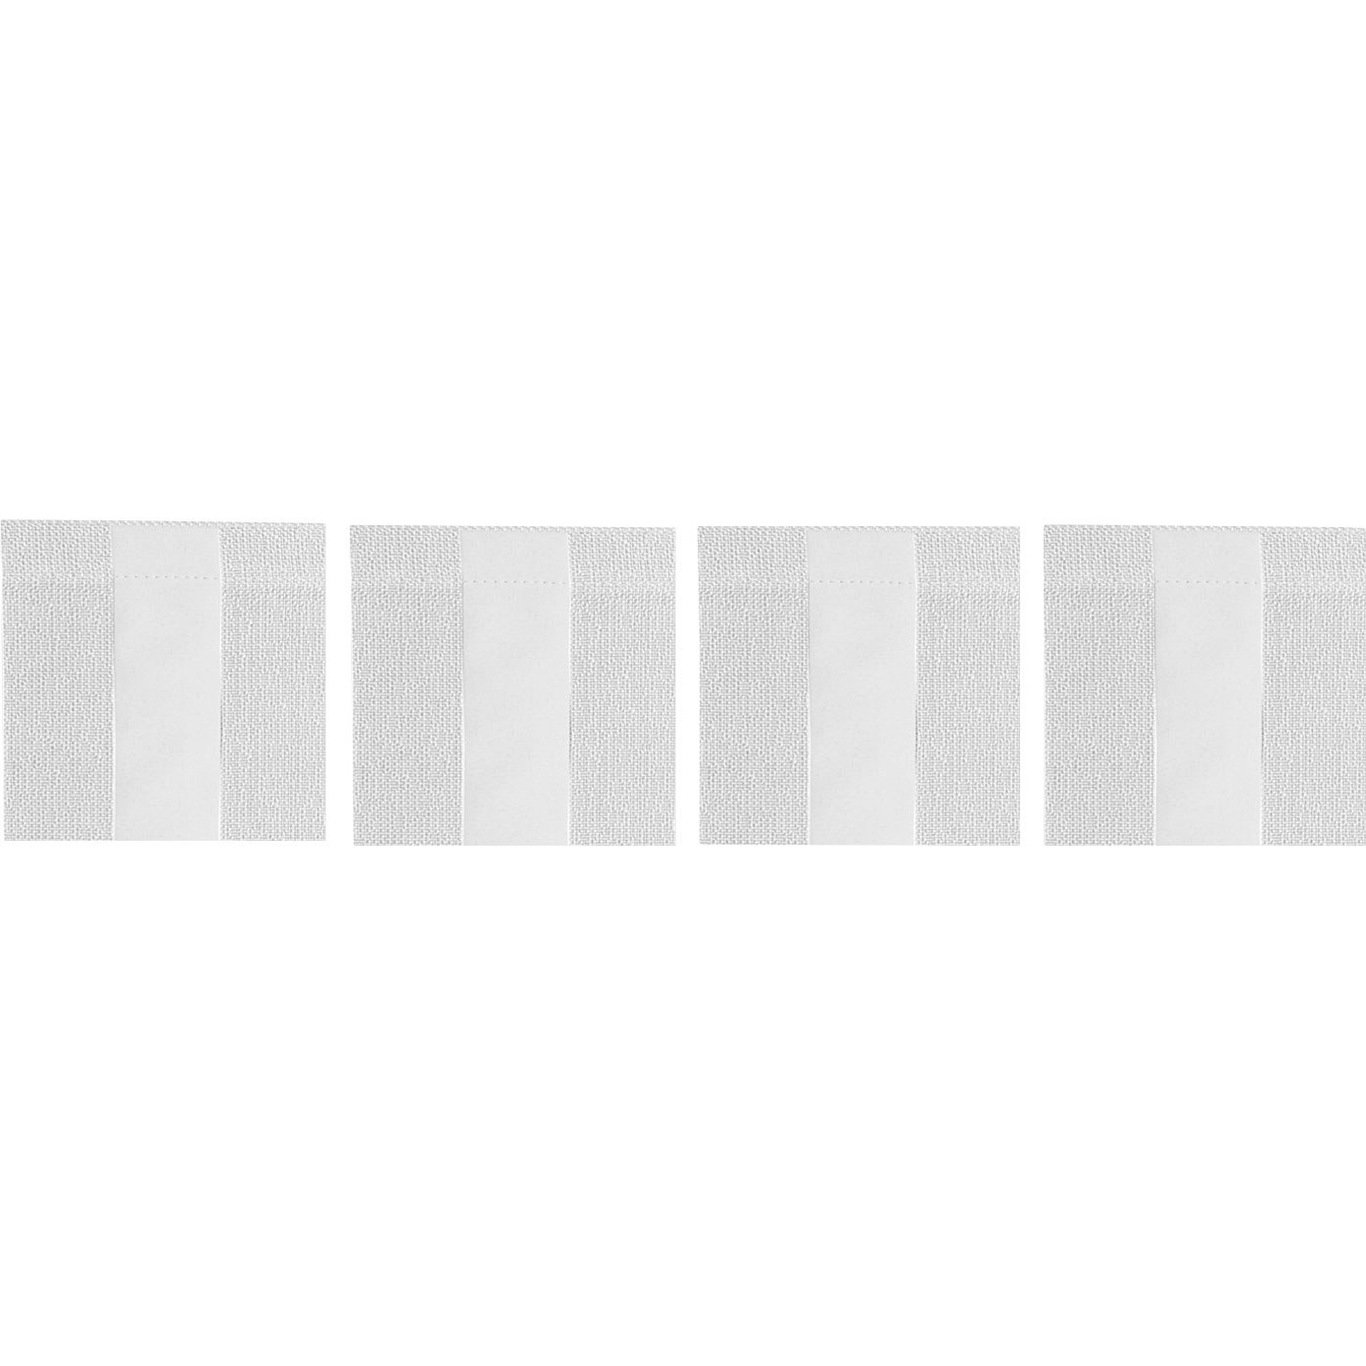 Wide Stripe Lasinaluset 10x10 cm 4-pakkaus, Valkoinen